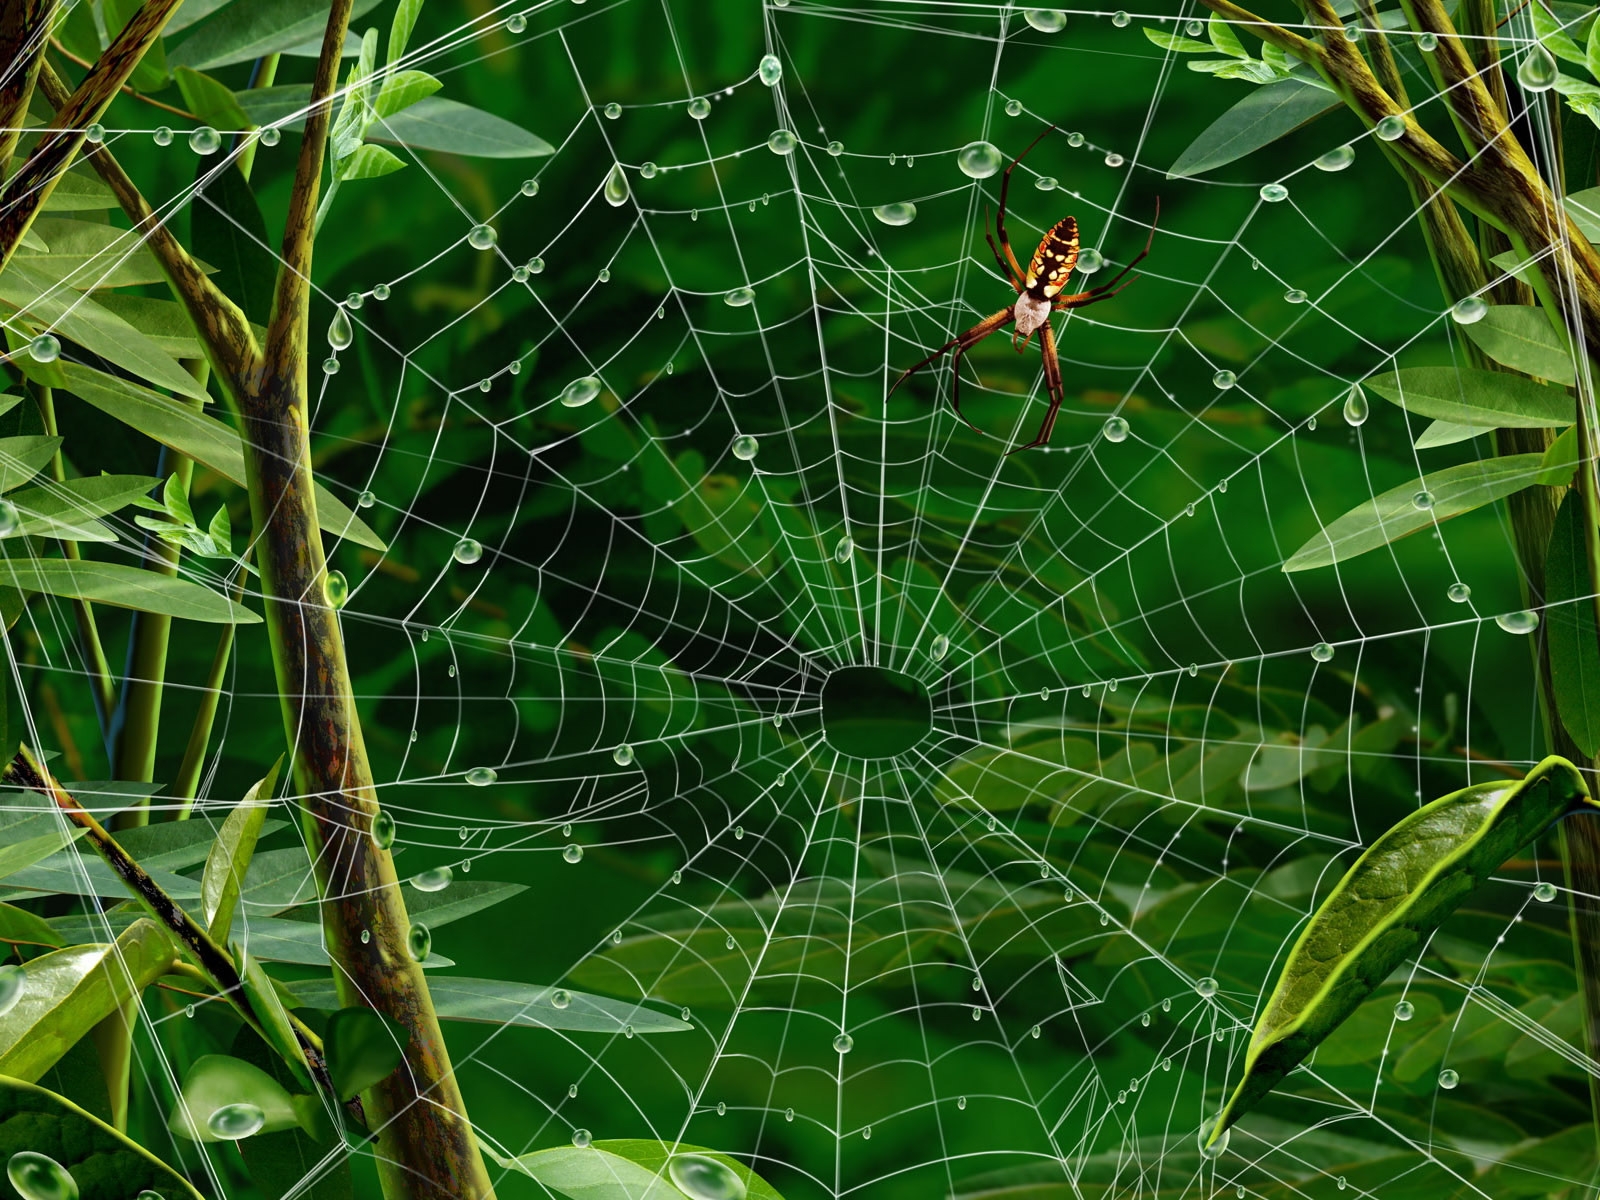 Spider walking for 1600 x 1200 resolution